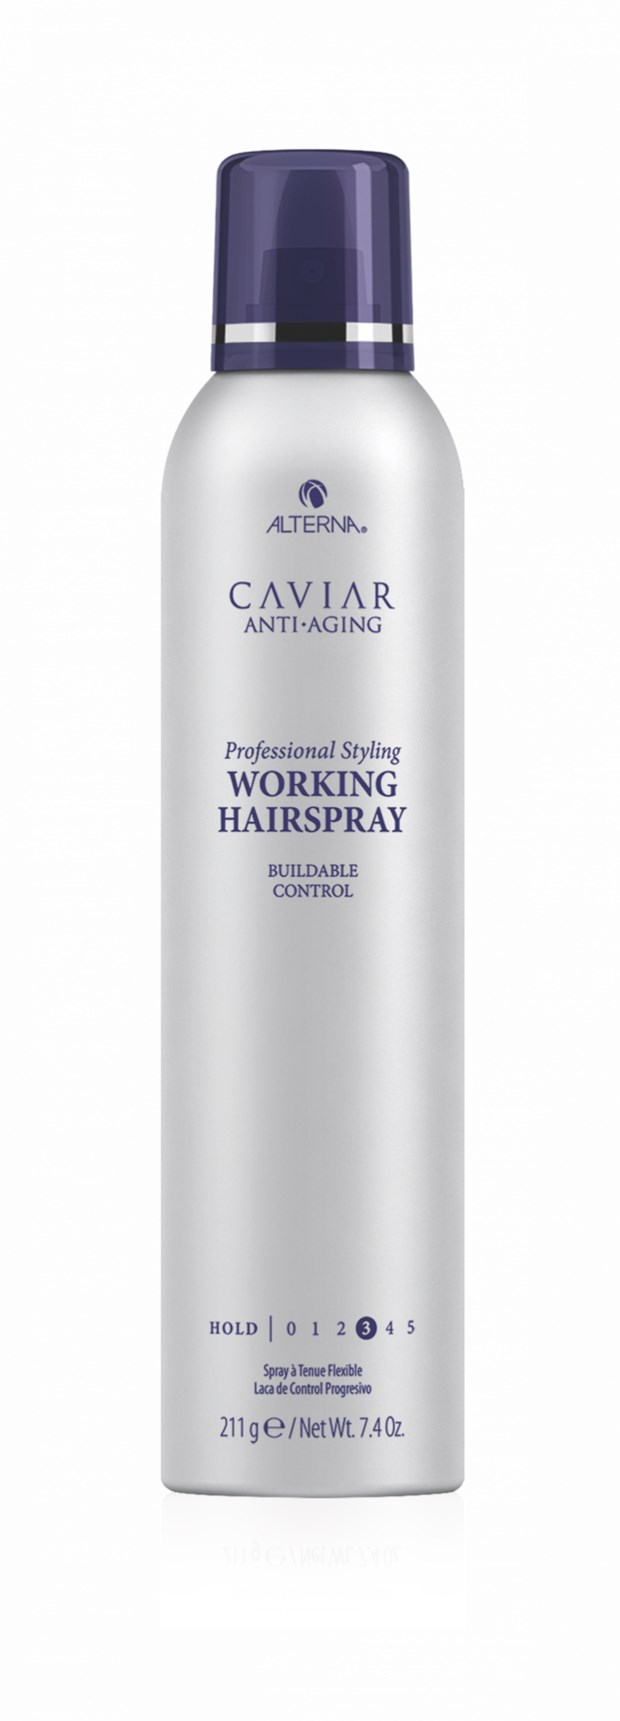 Caviar Anti-Aging Styling Working Hairspray